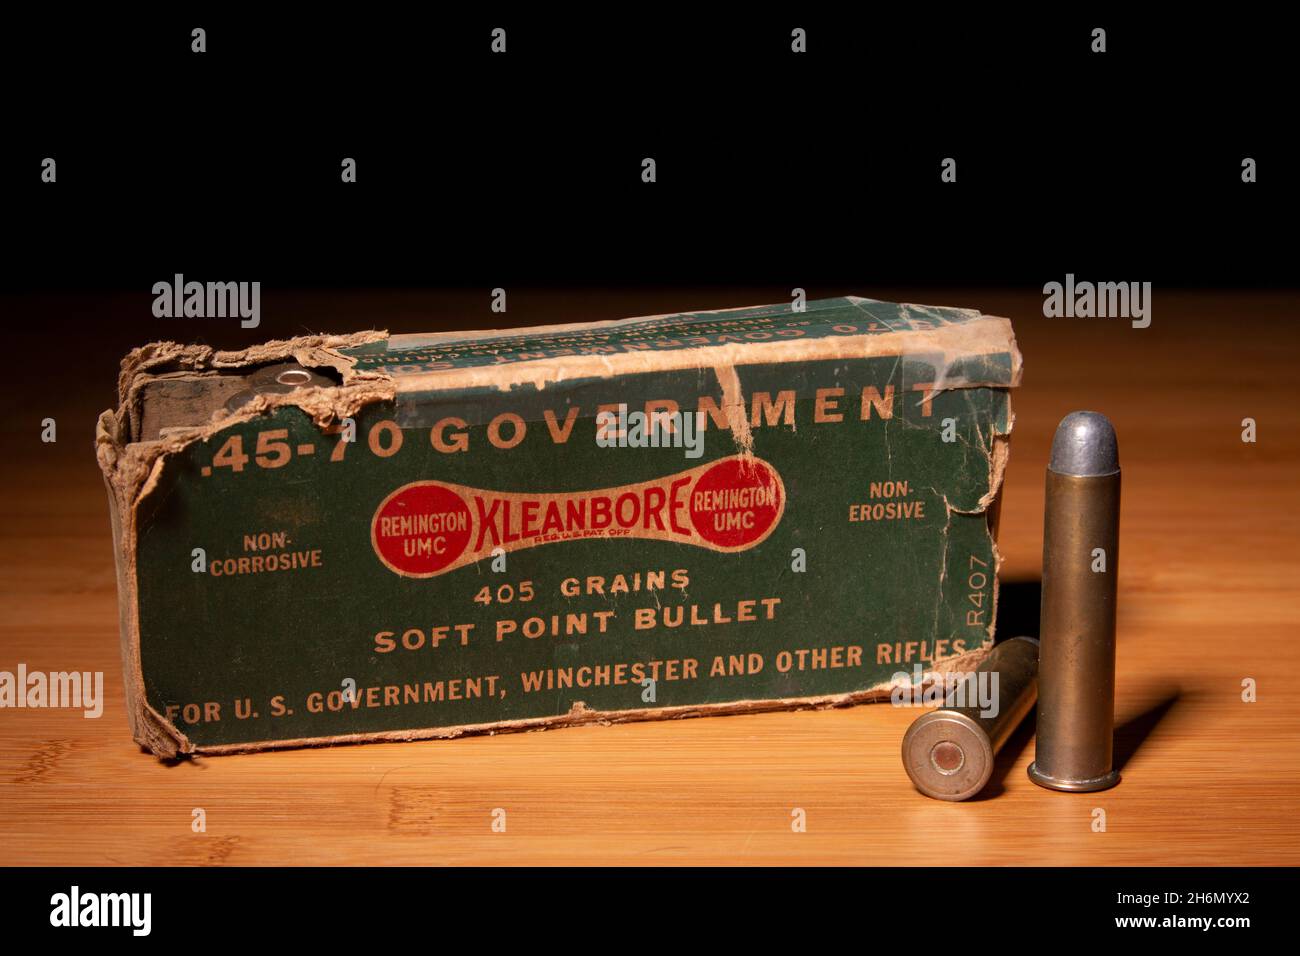 .45-70 Government Remington UMC Kleanbore Ammunition Stock Photo